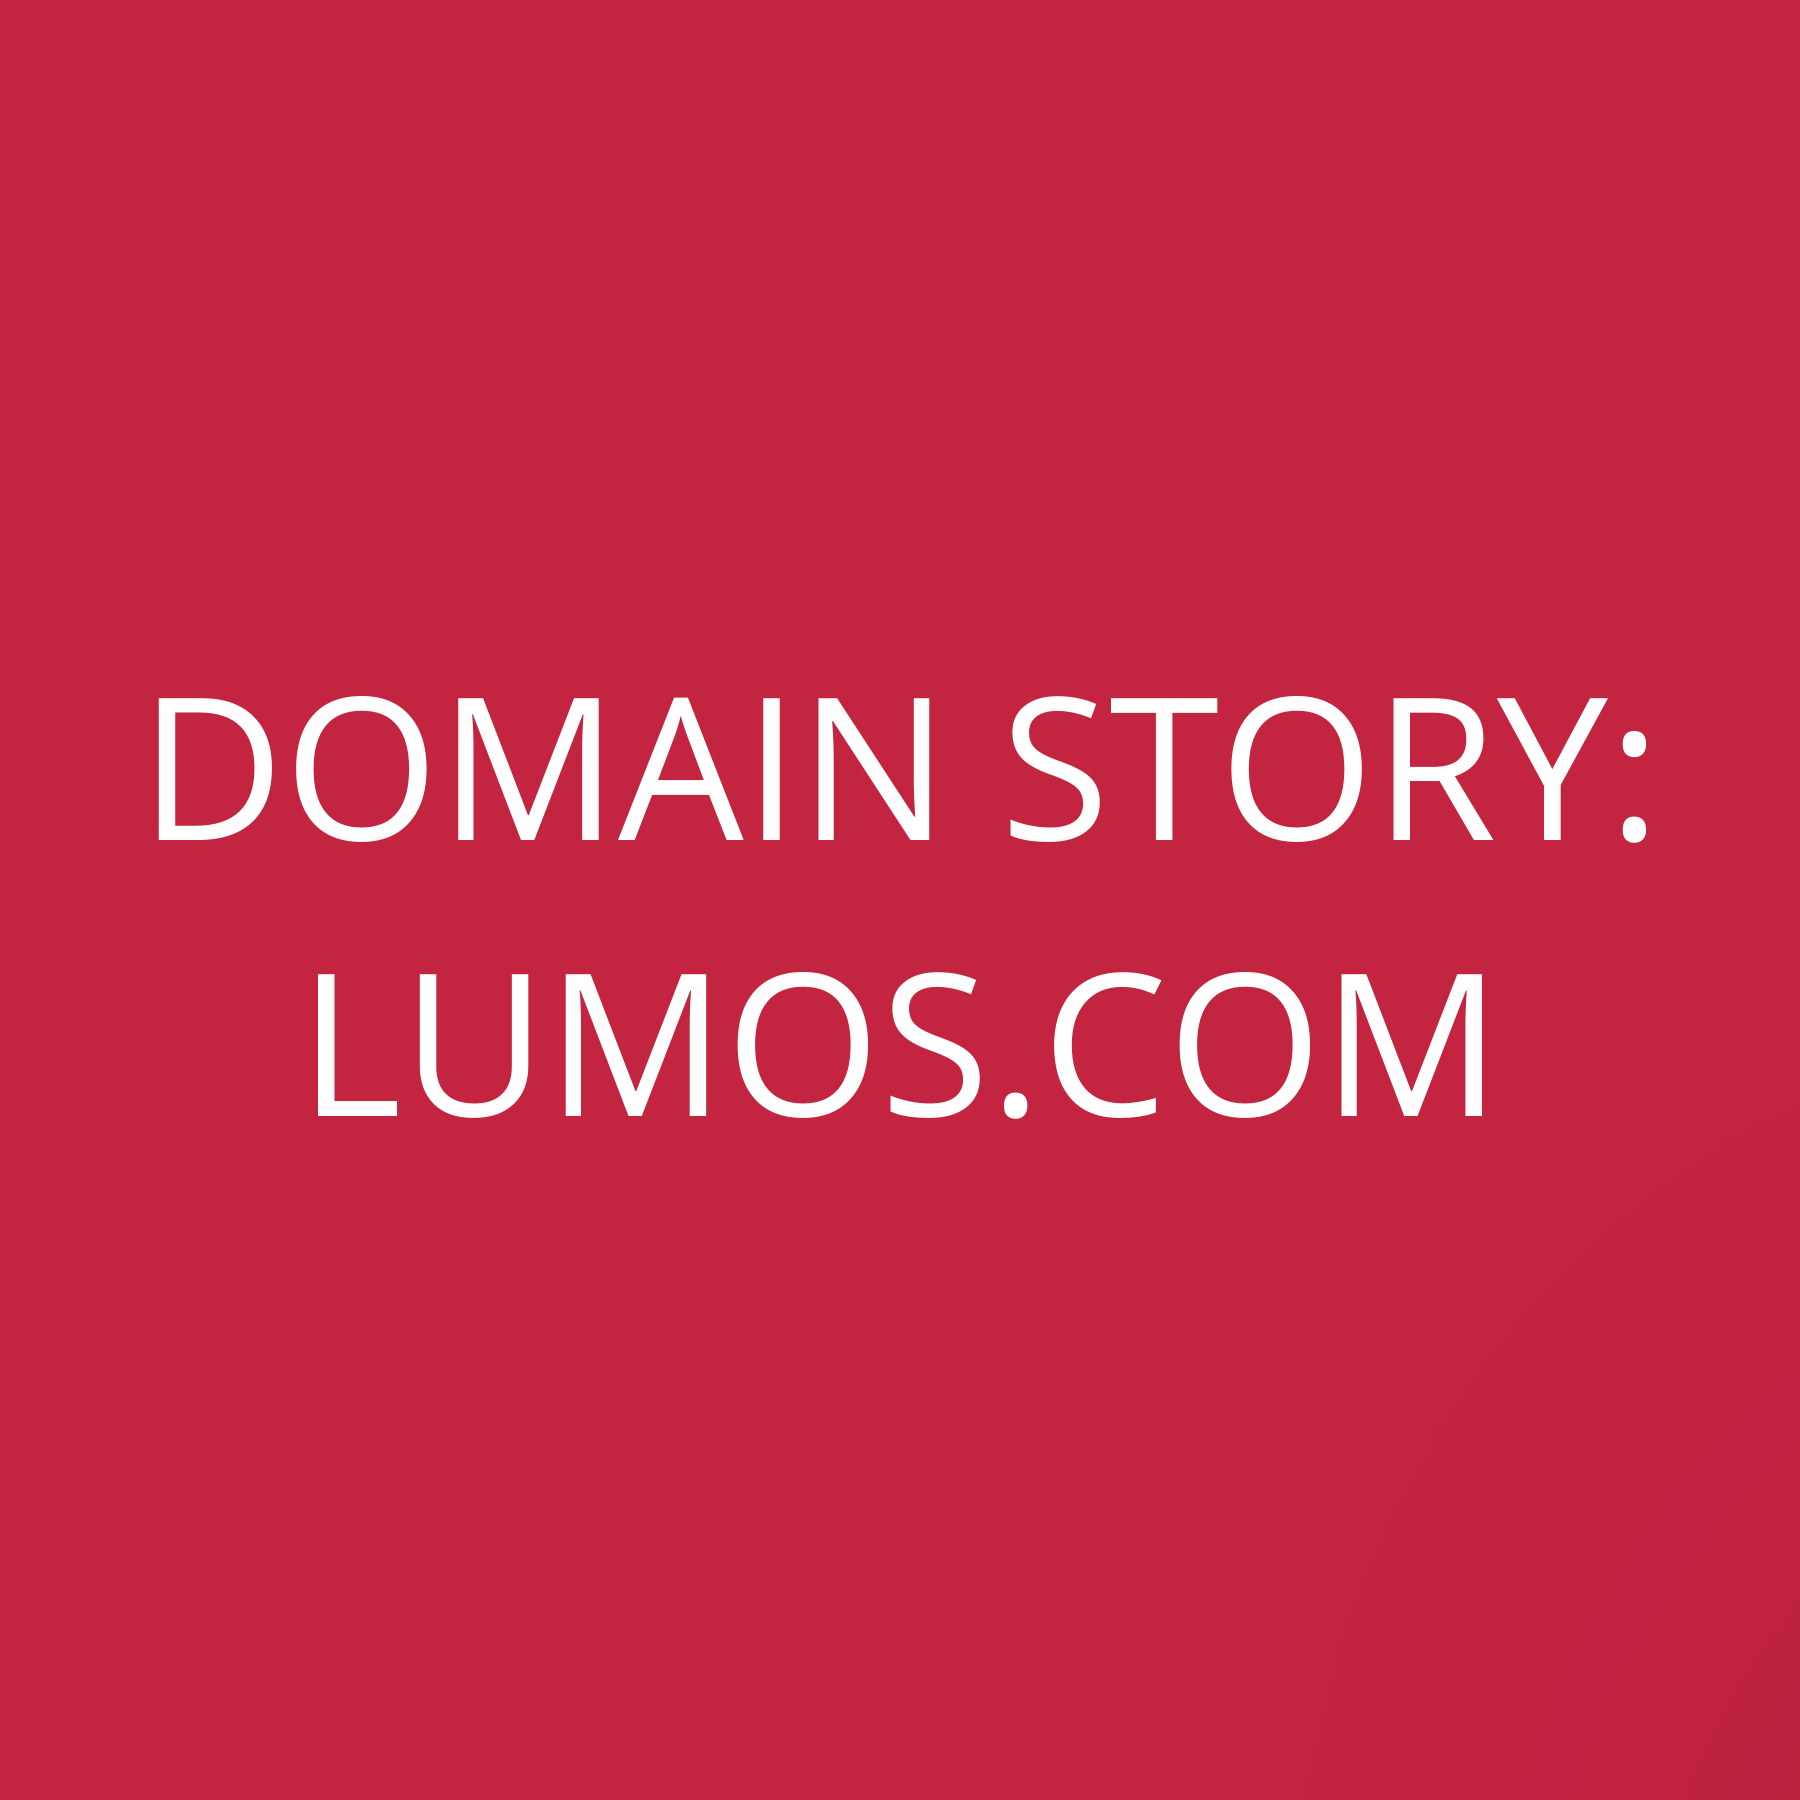 Domain Story: Lumos.com